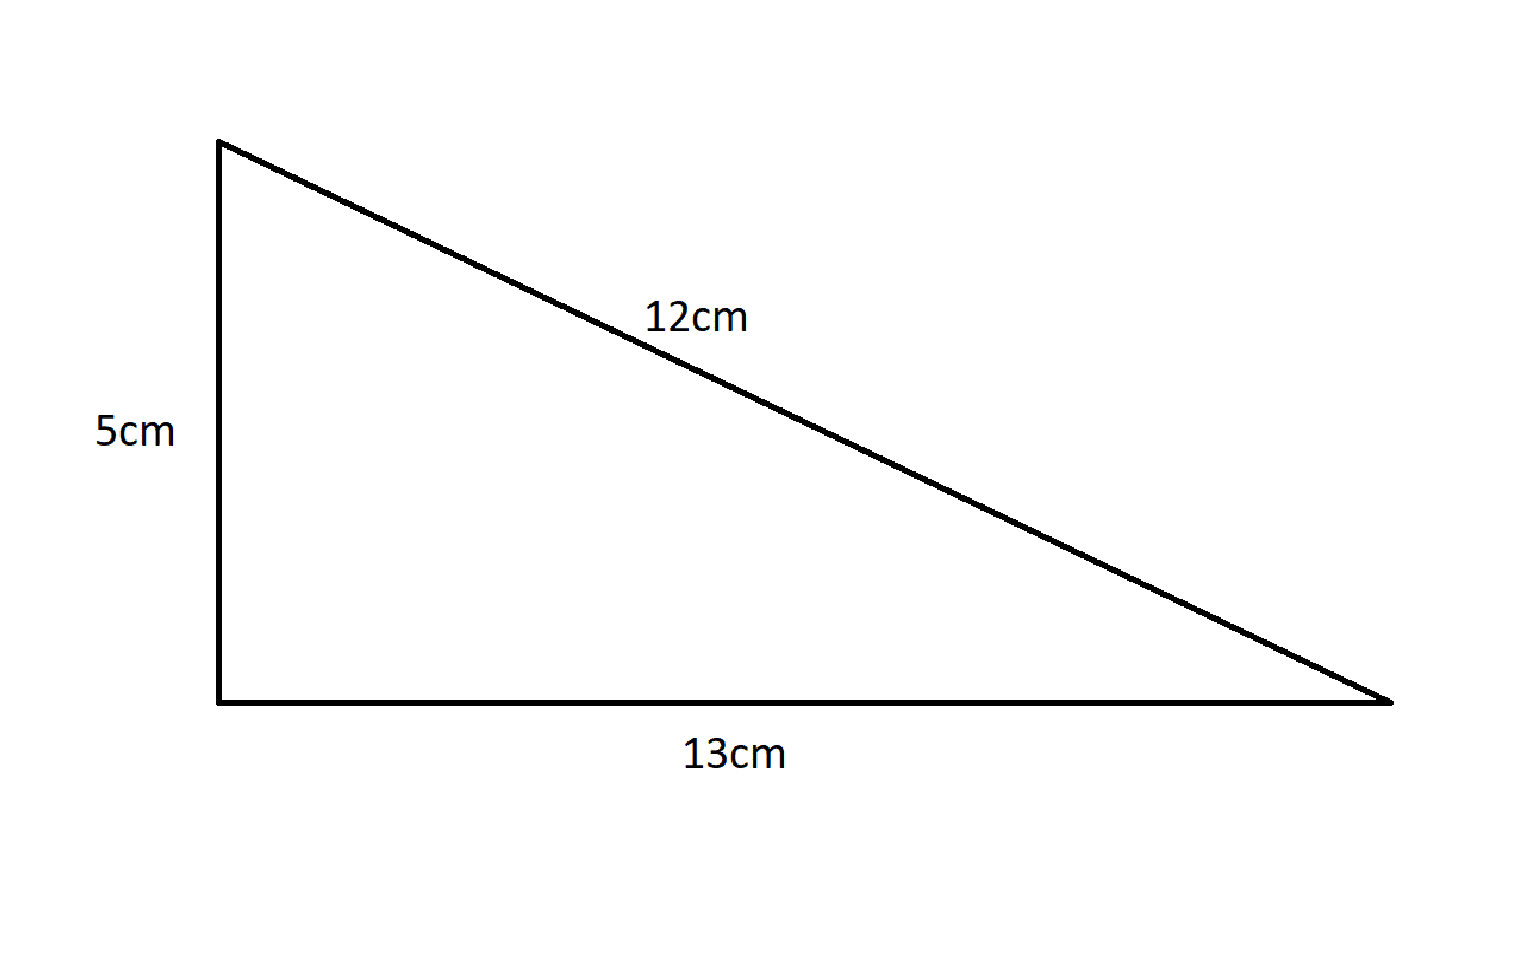 Calculer l'aire d'un triangle